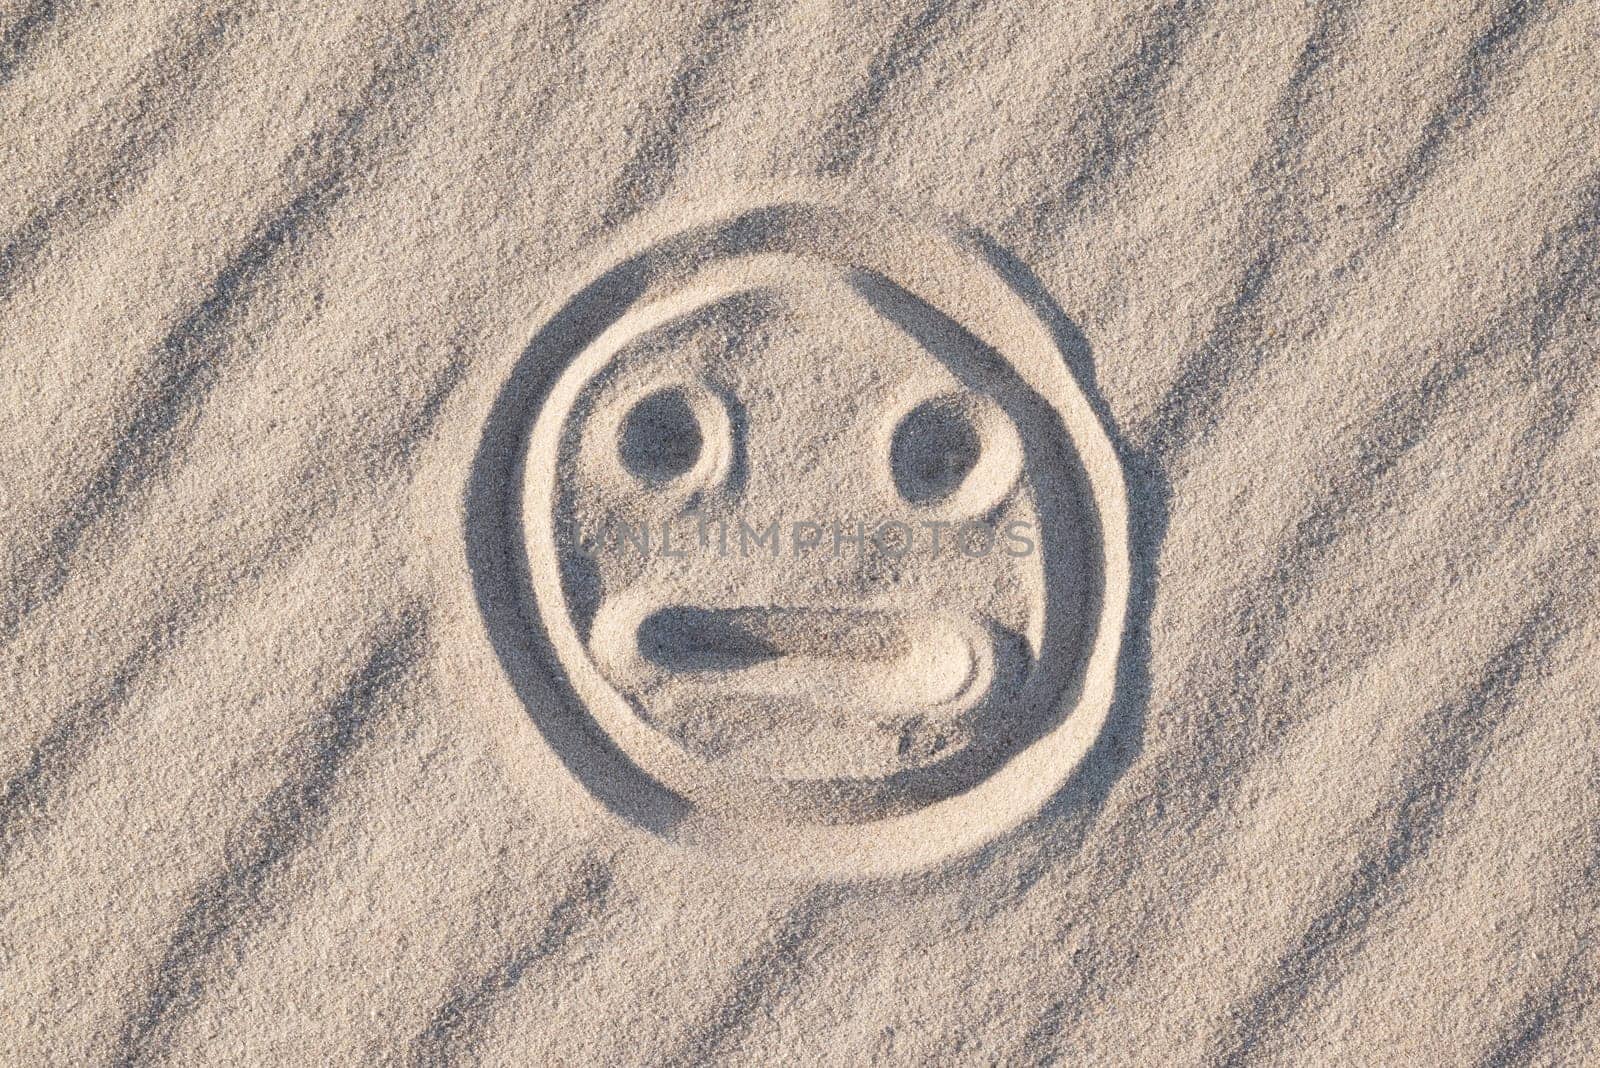 Sad and bewildered smile on sand by VitaliiPetrushenko